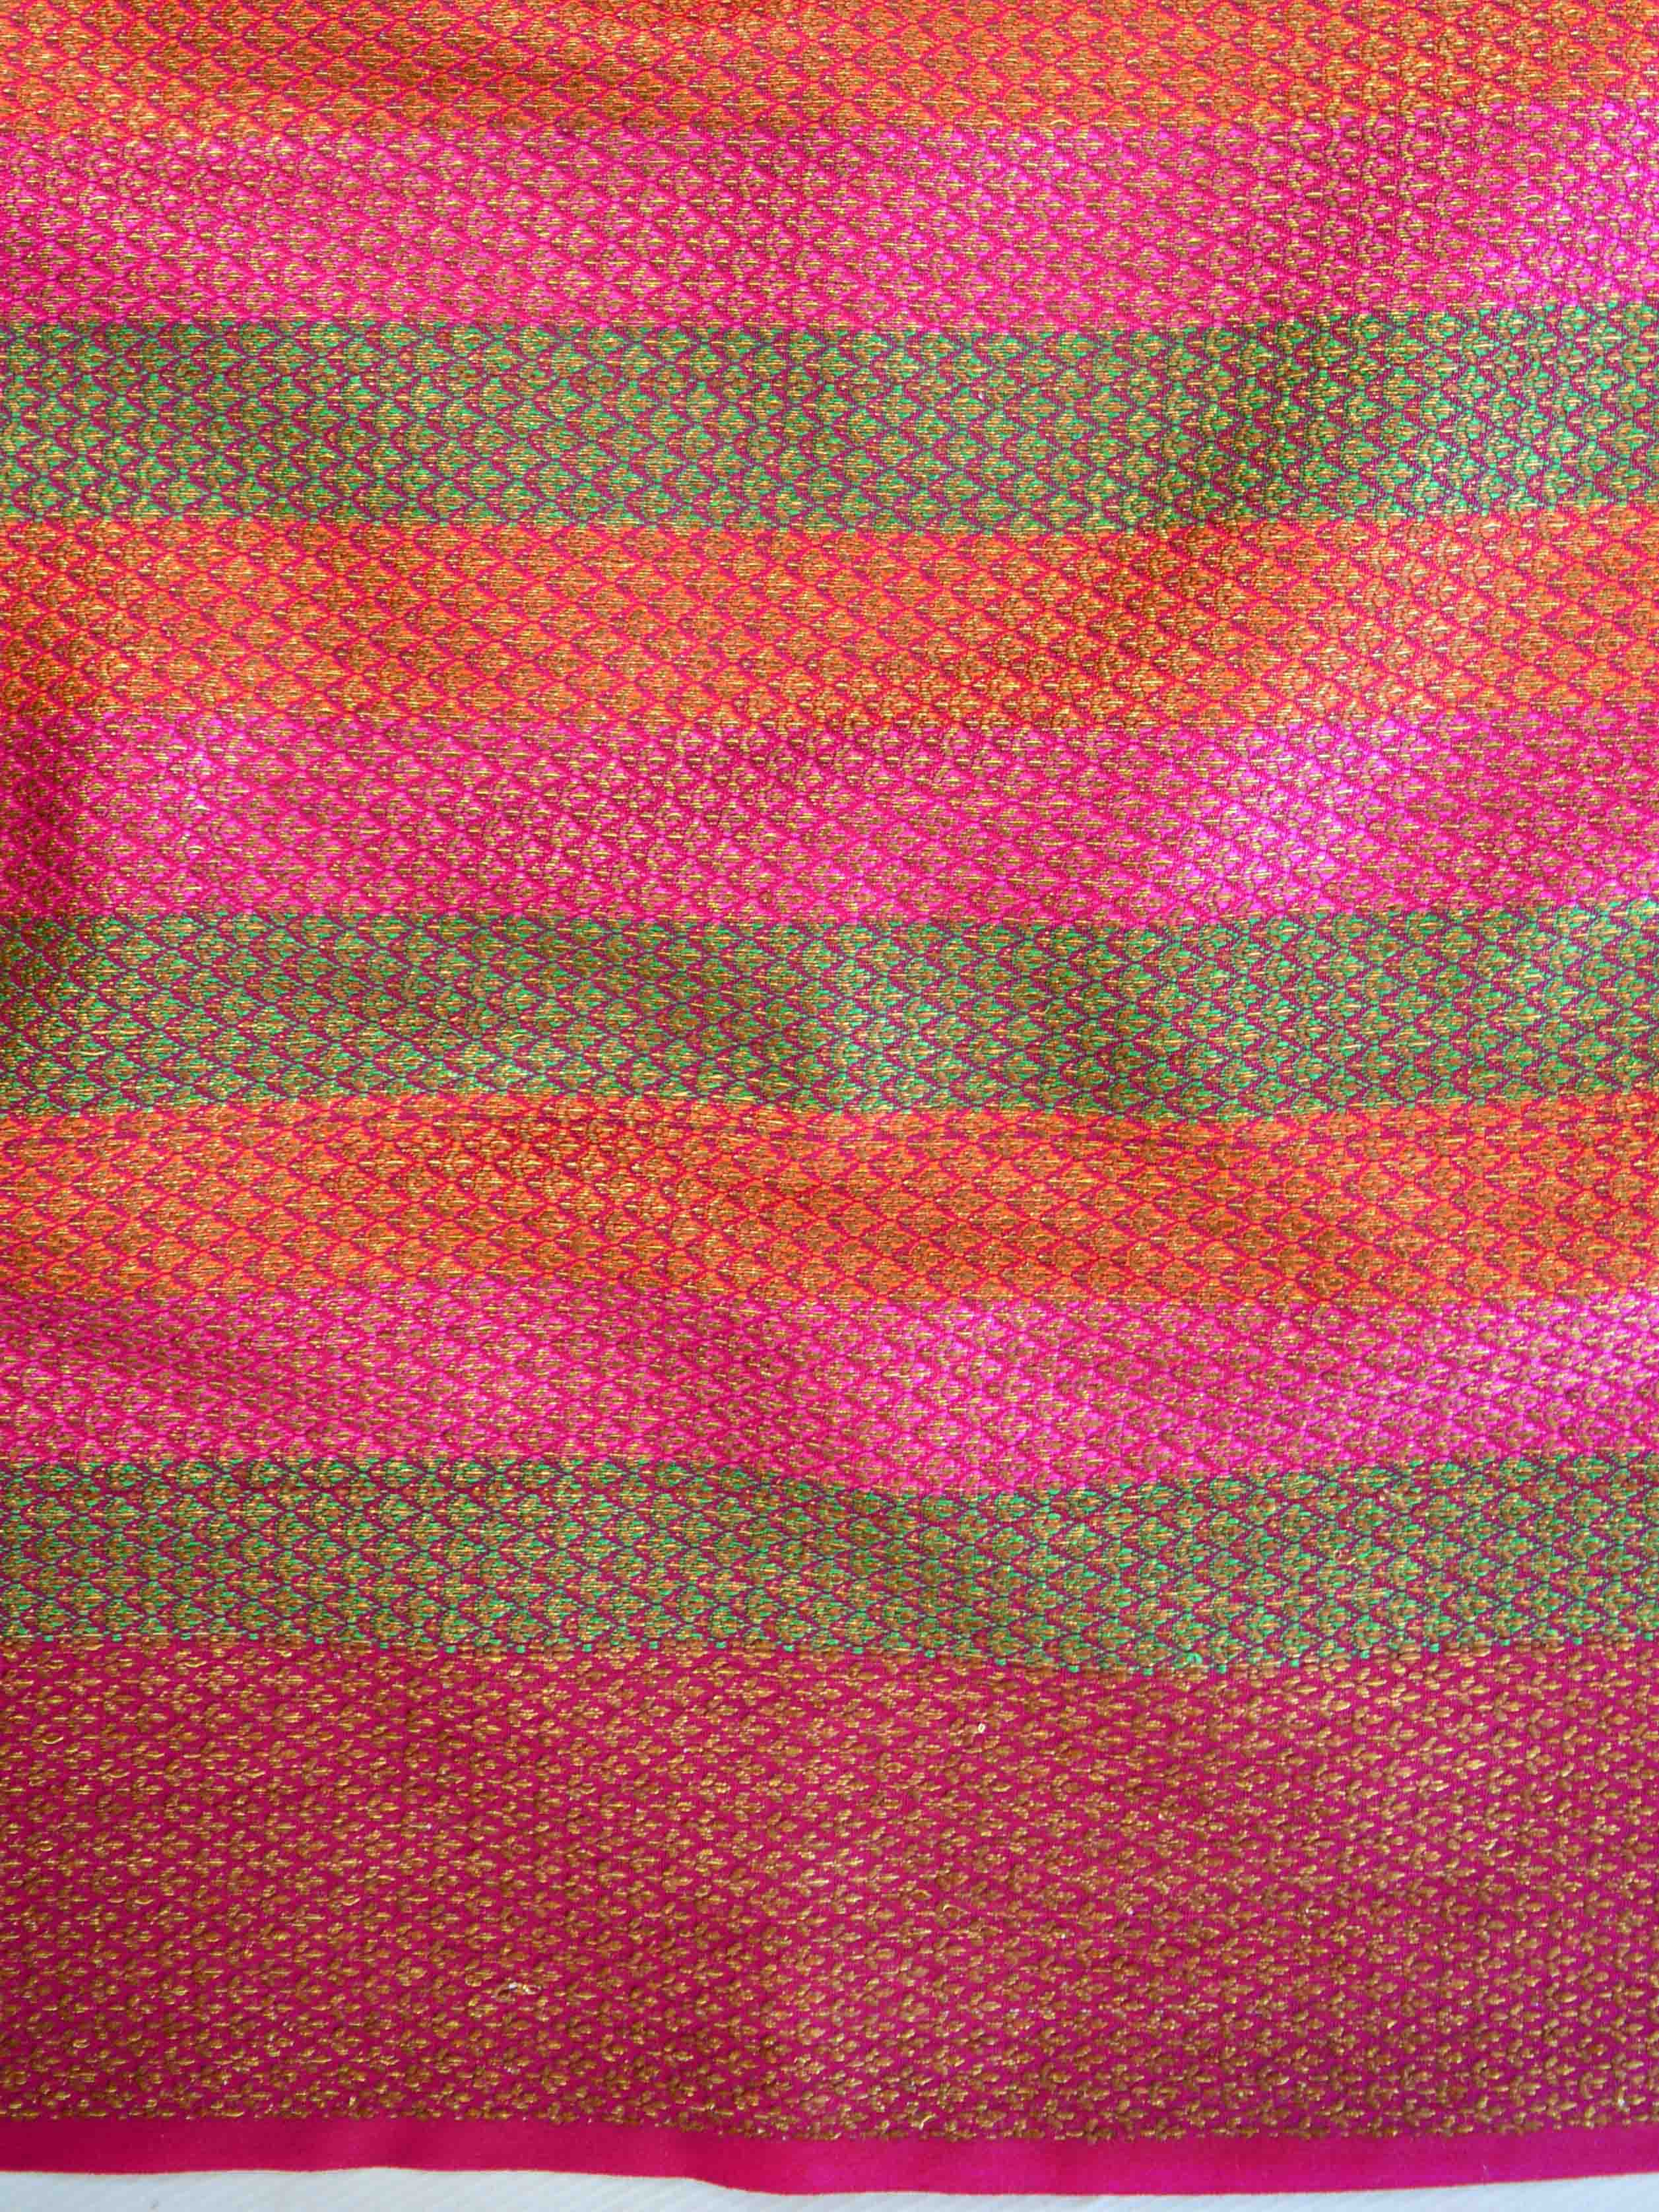 Banarasee Handwoven Semi Silk Saree With Antique Zari Buta Design-Yellow & Pink